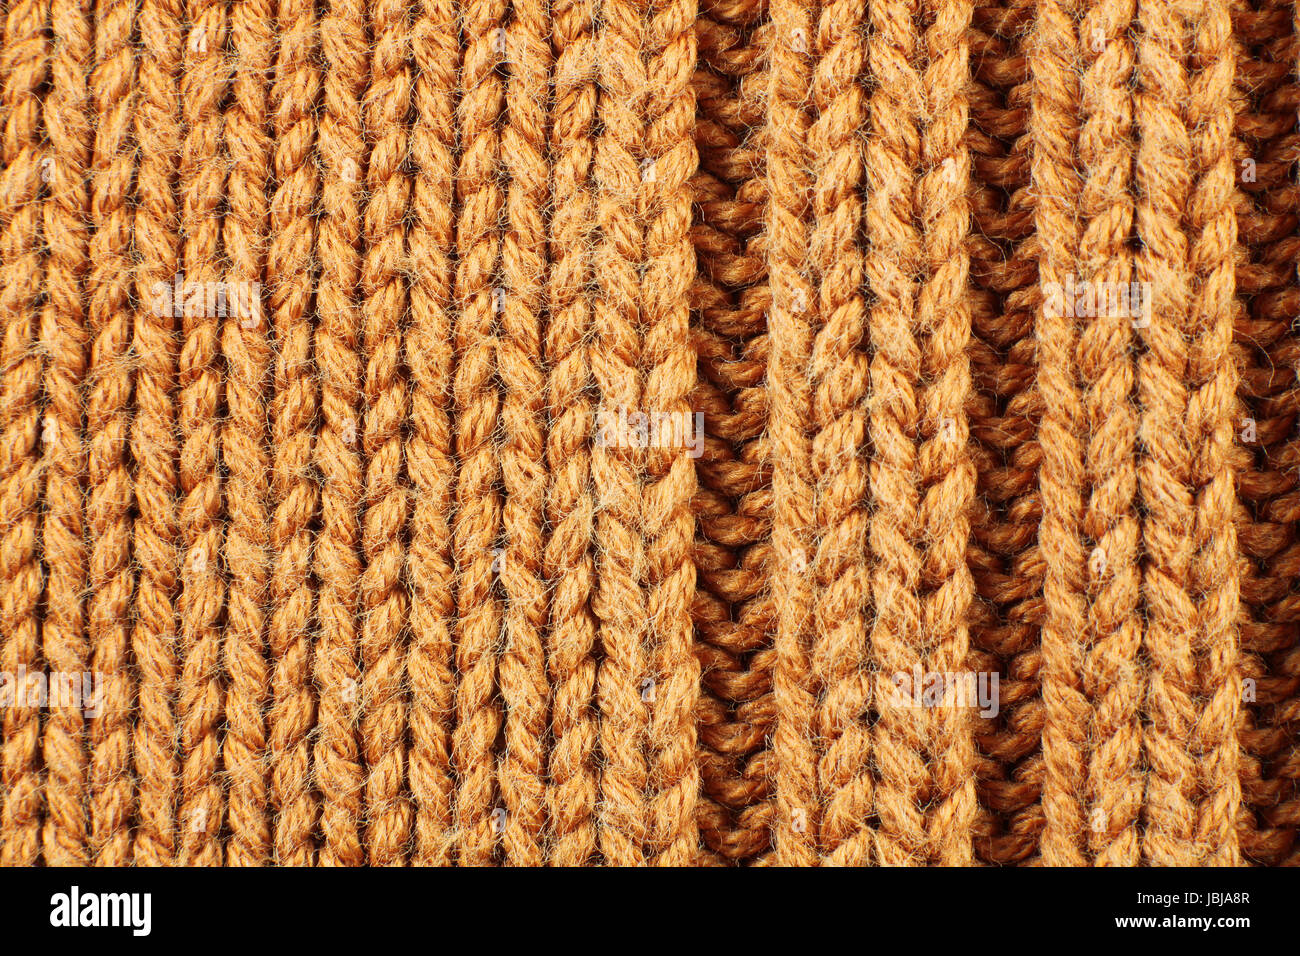 orange knitting patterns Stock Photo